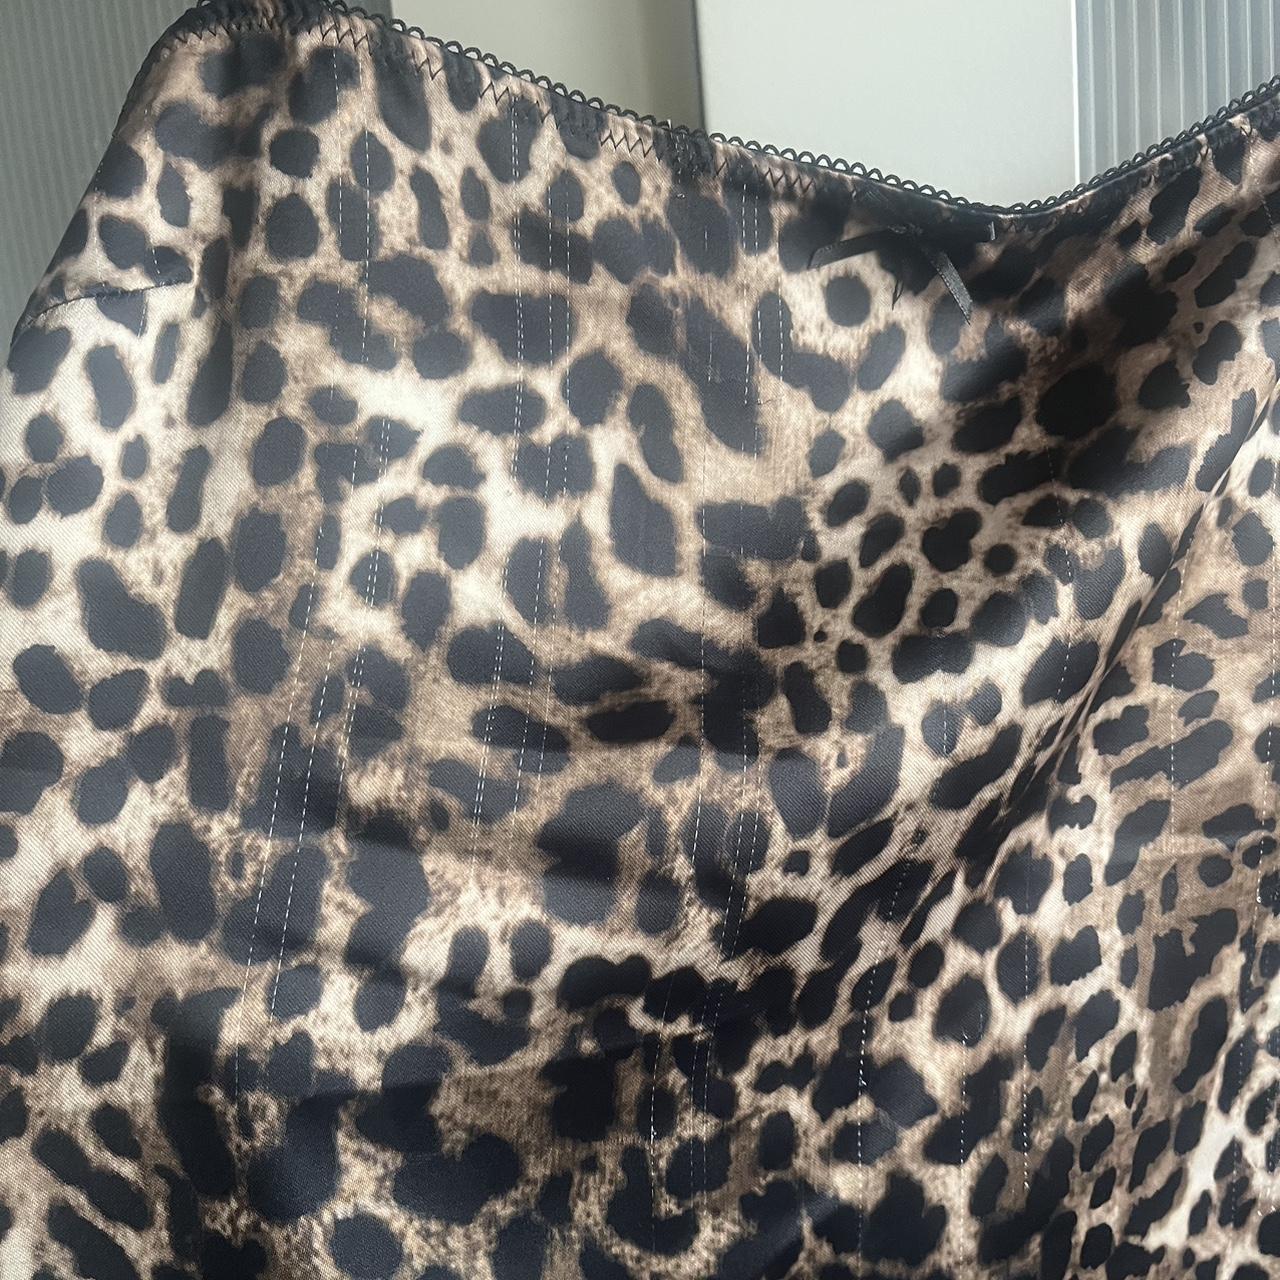 Zara satin leopard dress Size L Worn once for a... - Depop